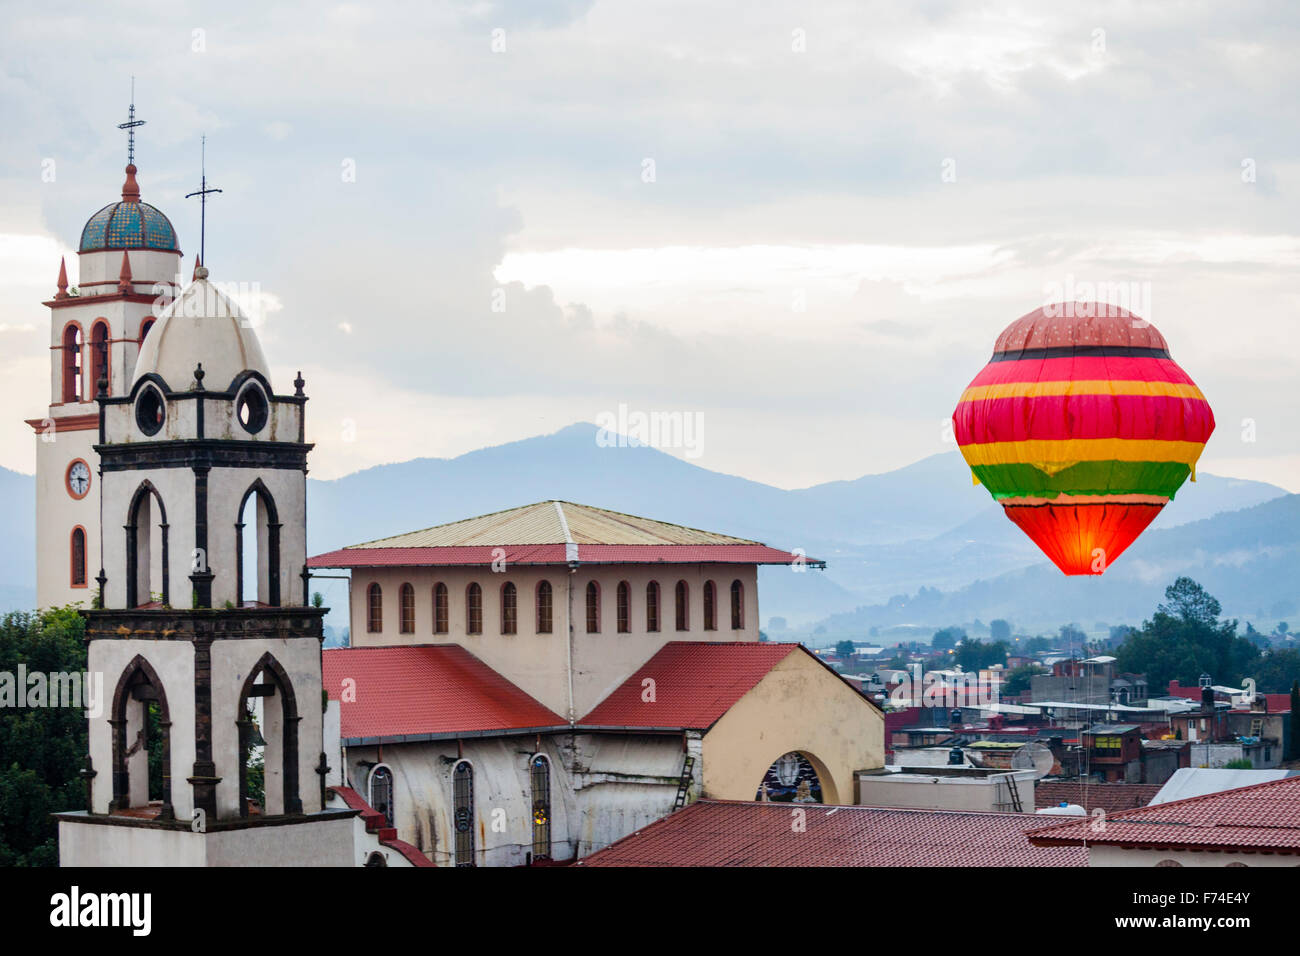 A large sky lantern floats upwards over Paracho, Michoacan, Mexico during the annual Globos de Cantoya festival. Stock Photo